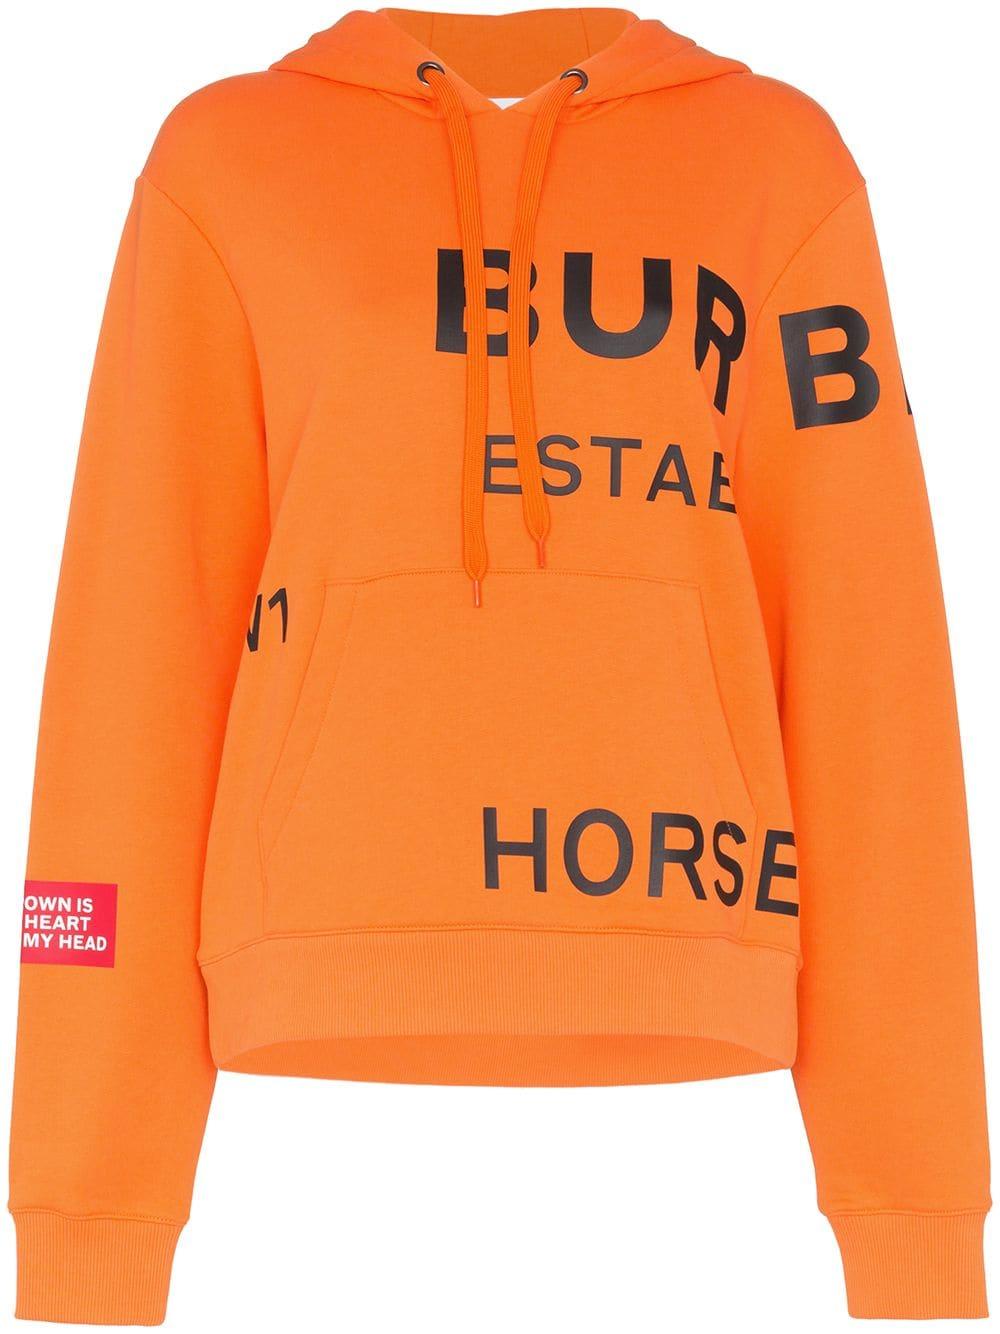 burberry horseferry hoodie